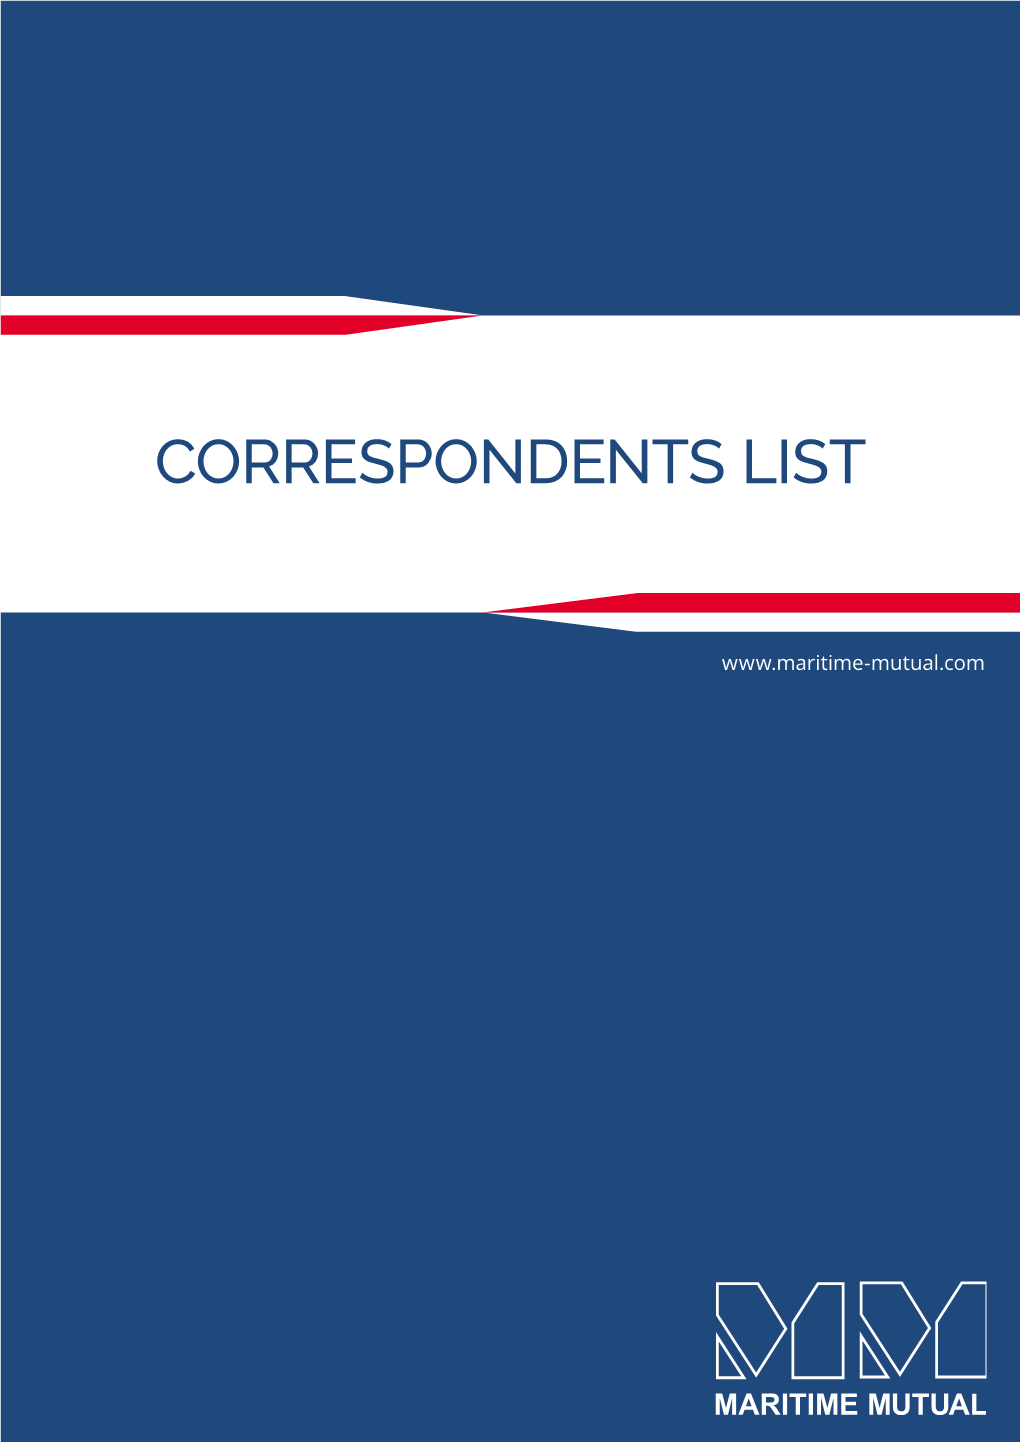 MMIA Correspondents Contact List